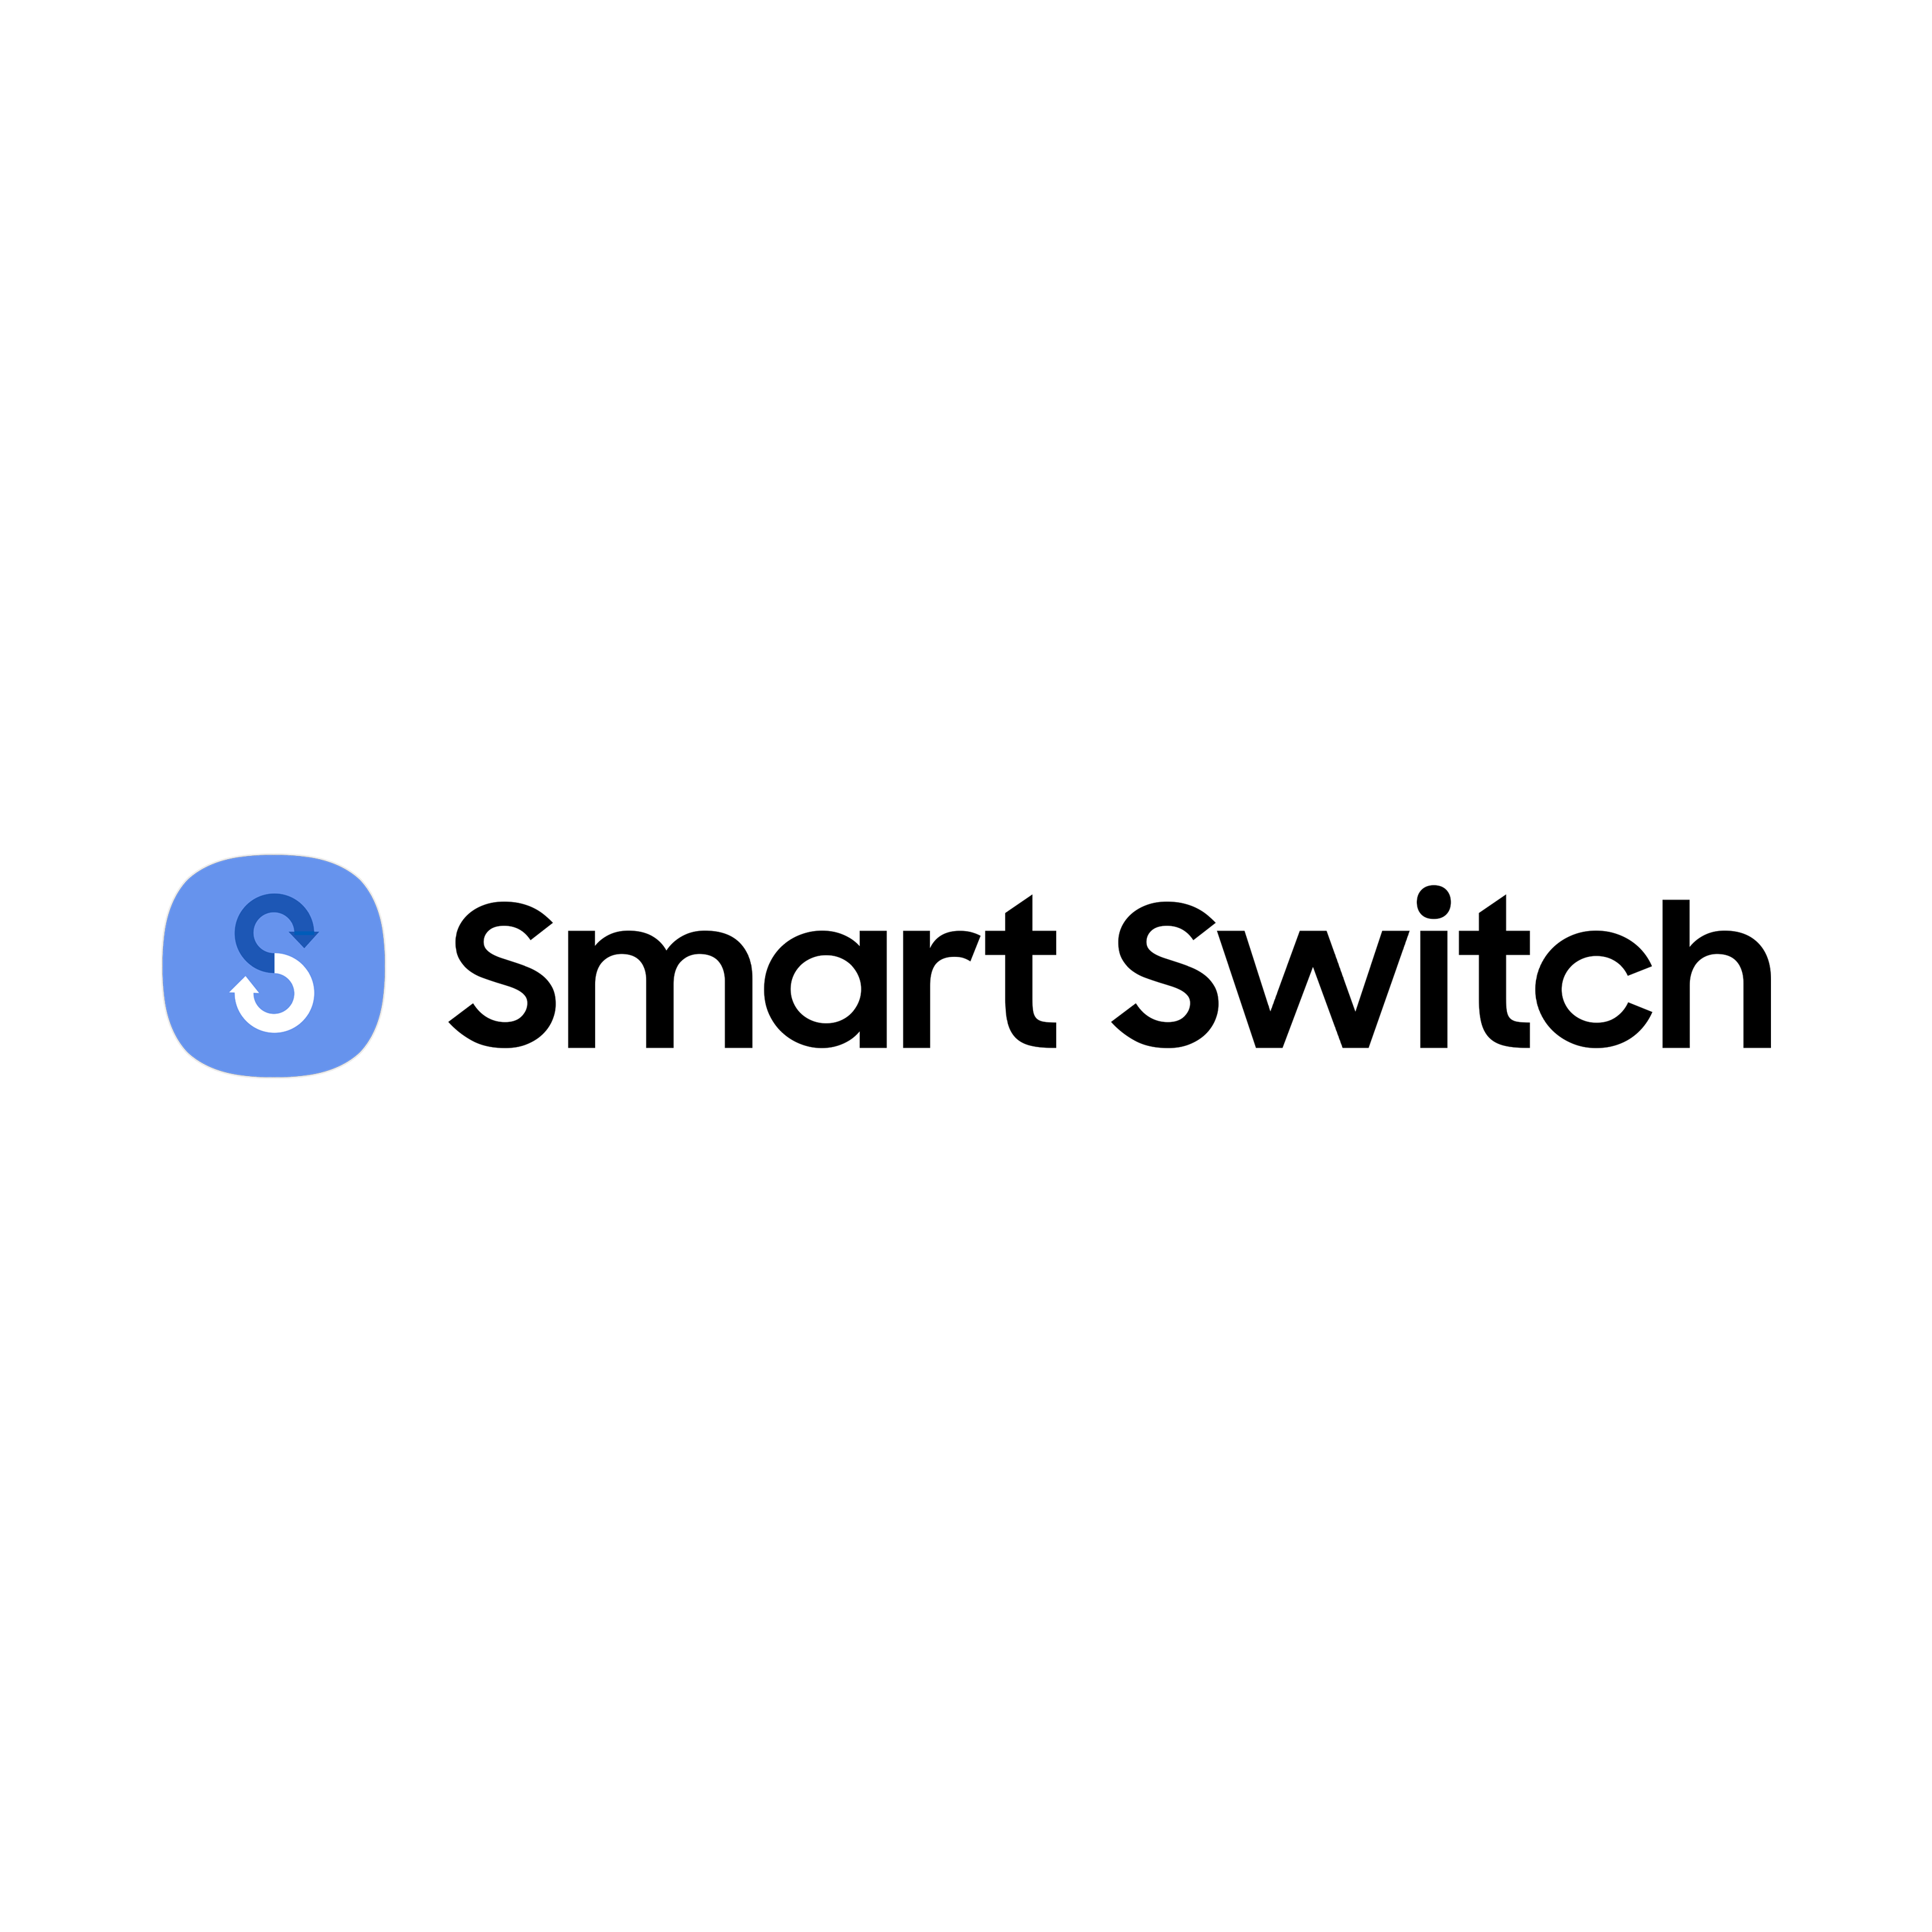 Samsung Smart Switch Logo Transparent Photo